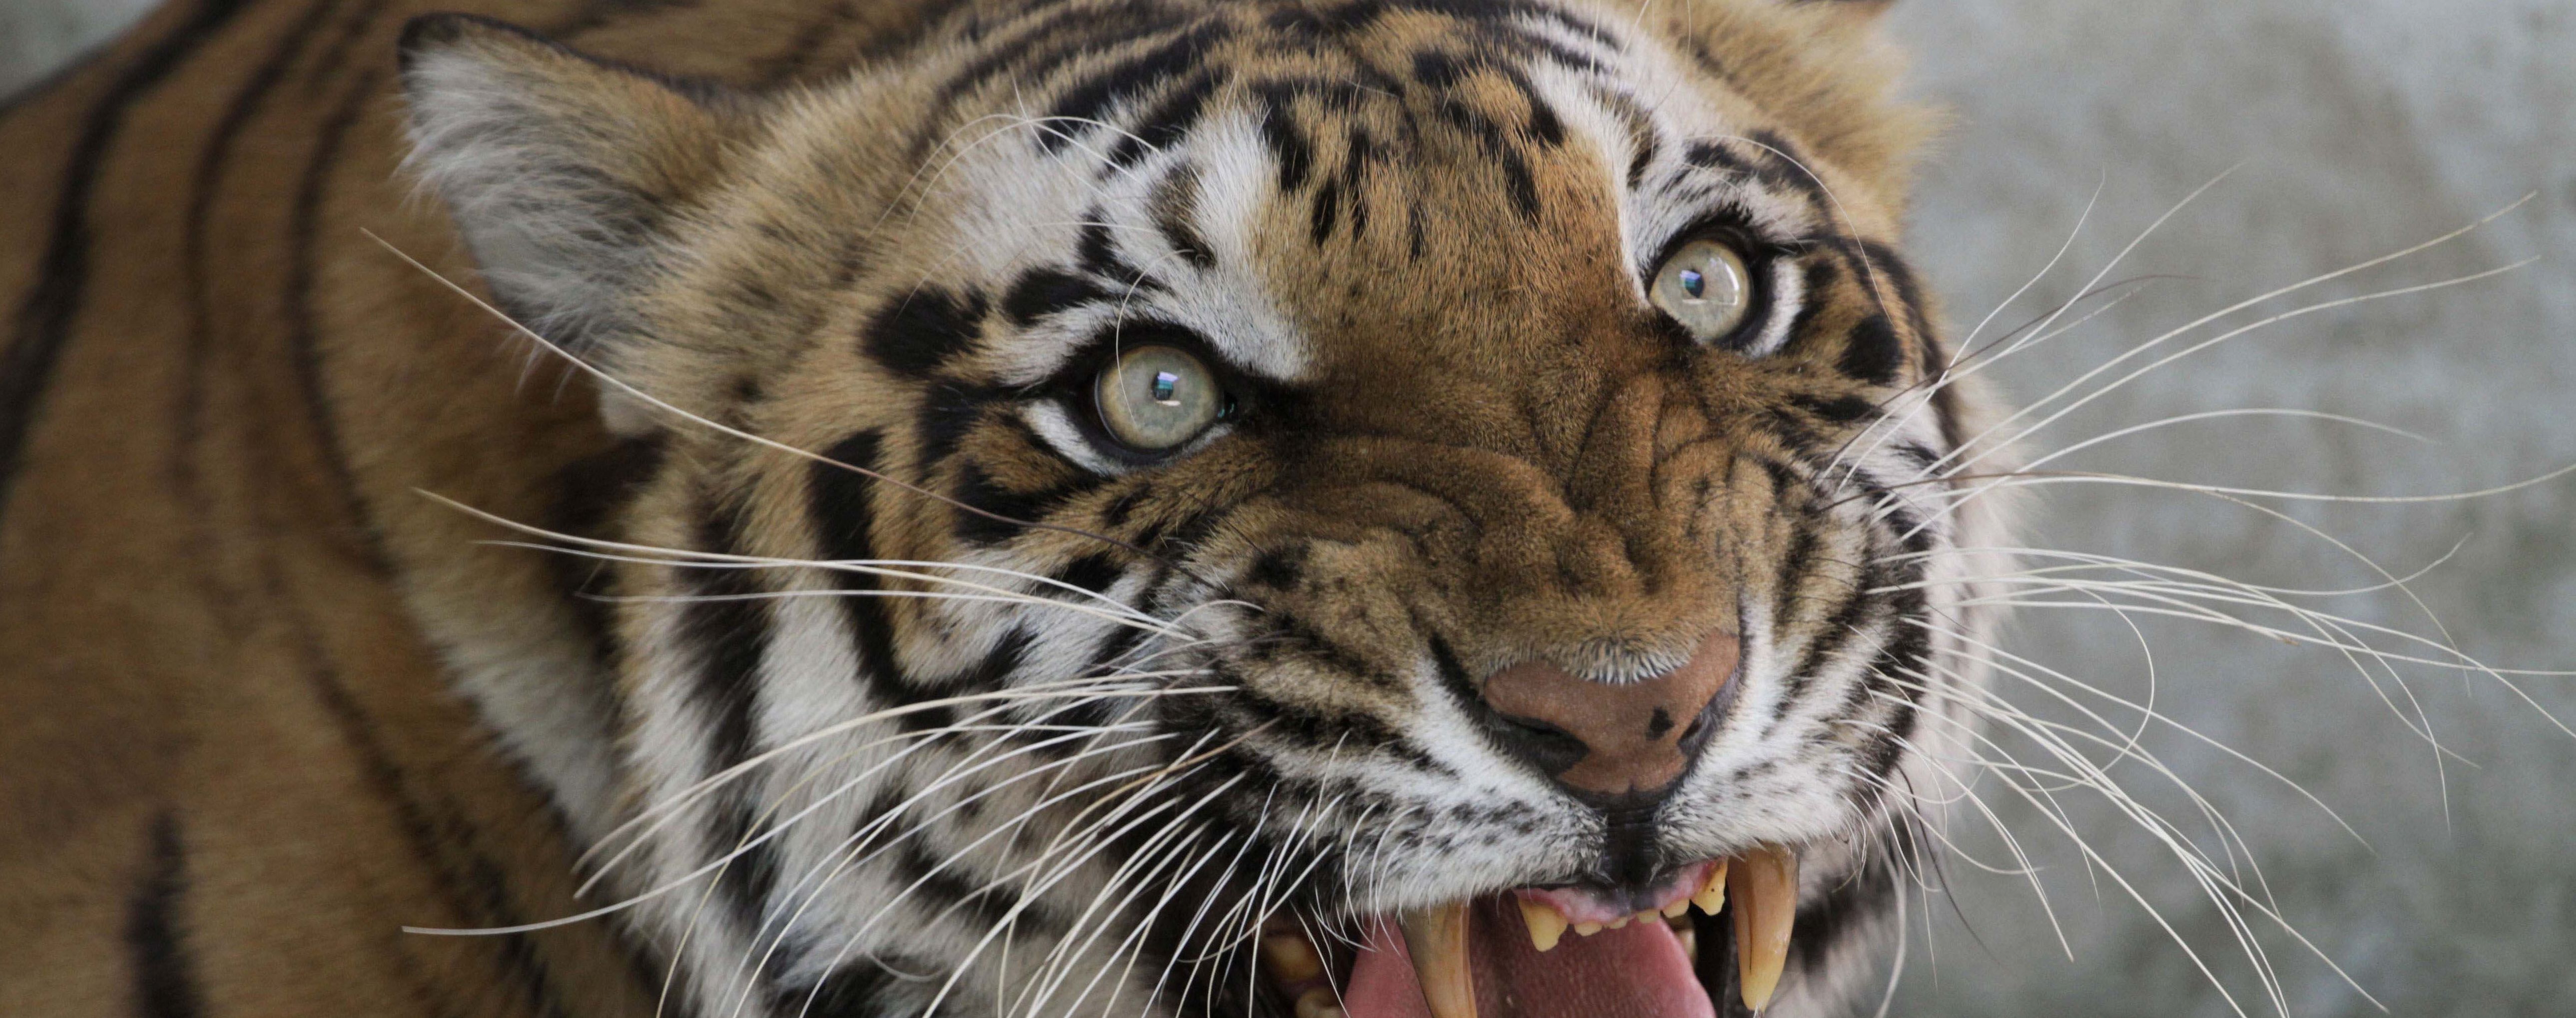 В Индии тигрица убила работника зоопарка